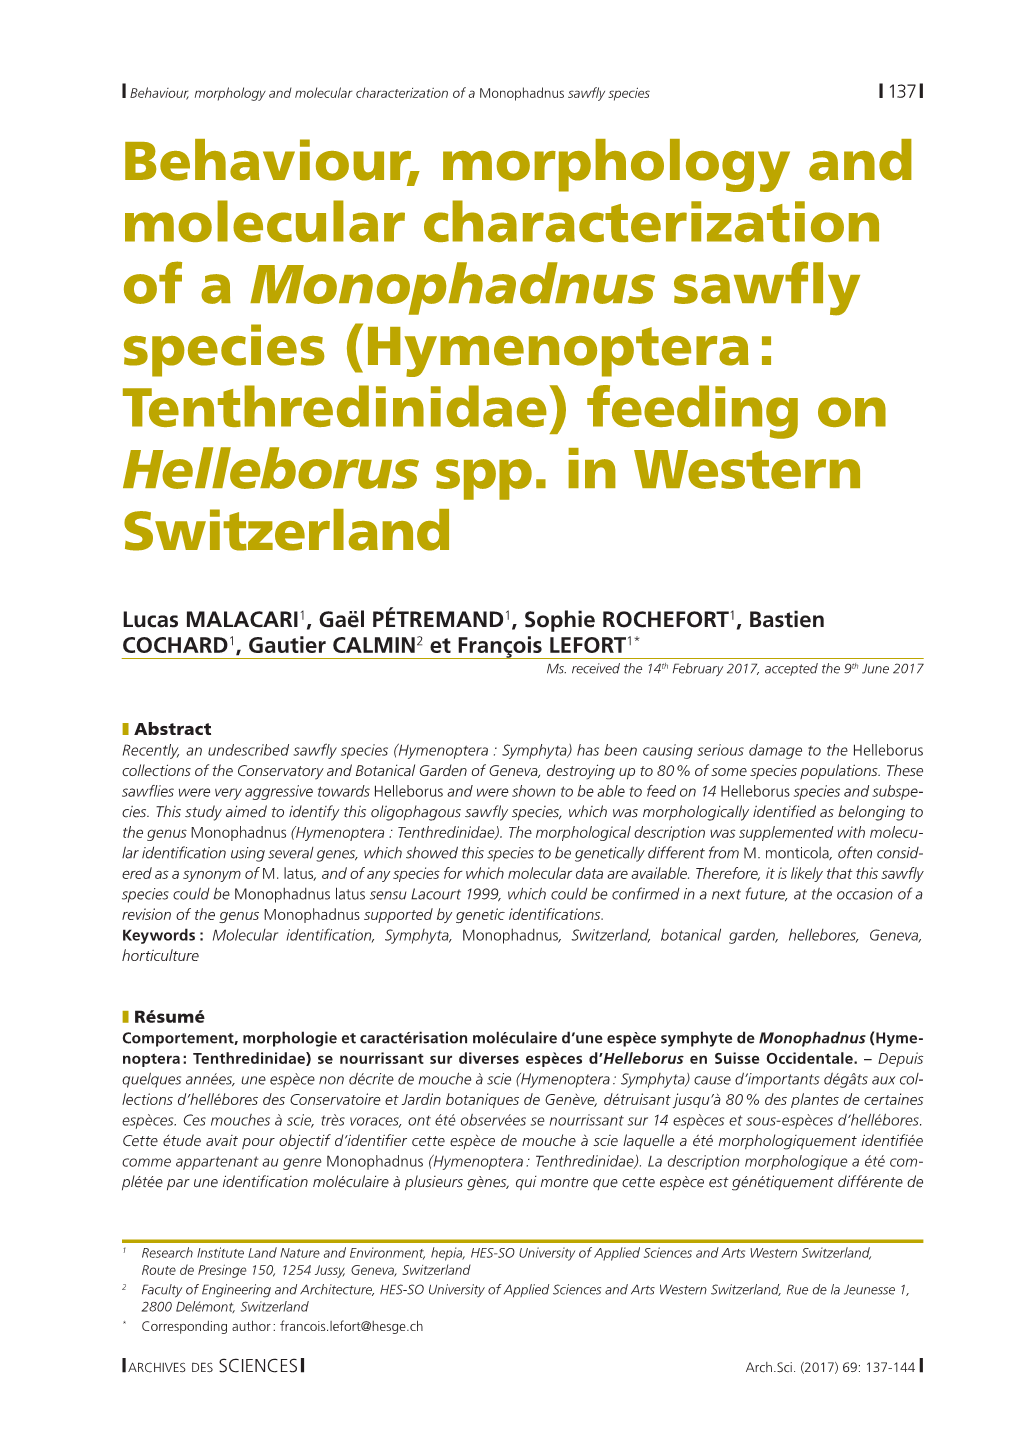 Behaviour, Morphology and Molecular Characterization of a Monophadnus Sawfly Species (Hymenoptera : Tenthredinidae) Feeding on Helleborus Spp